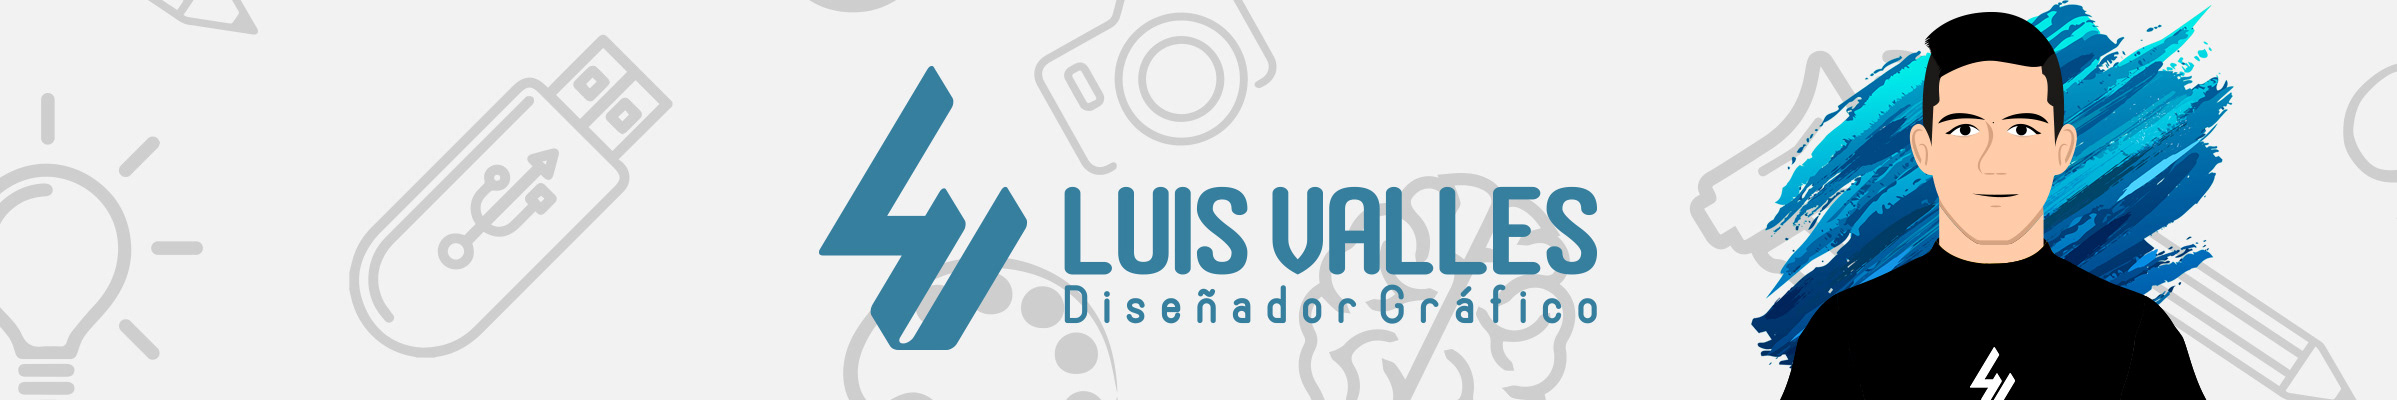 Luis Valles (Creazoom)s profilbanner